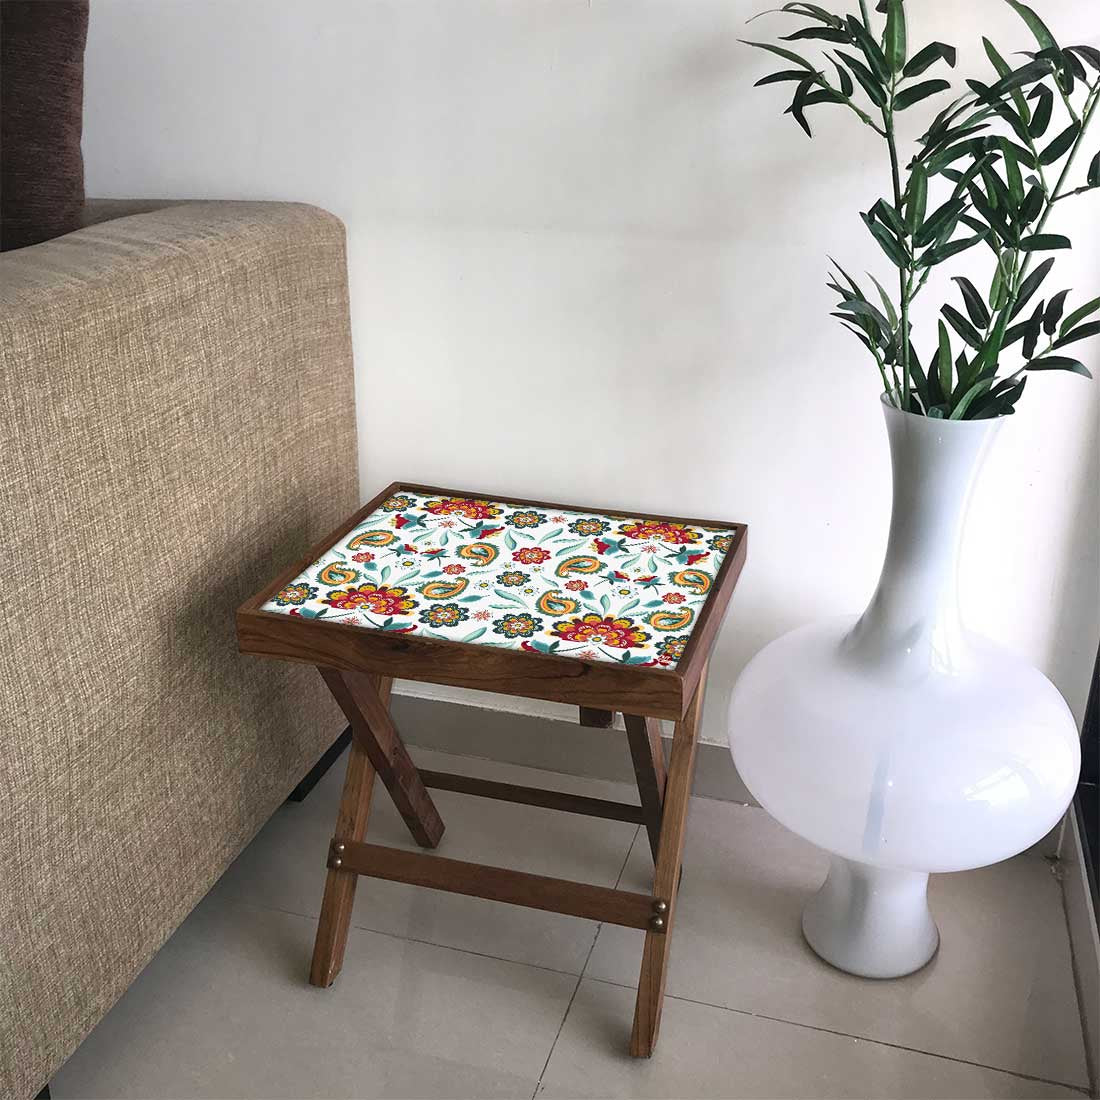 Folding Side Table - Teak Wood - Beautiful Tropical Design